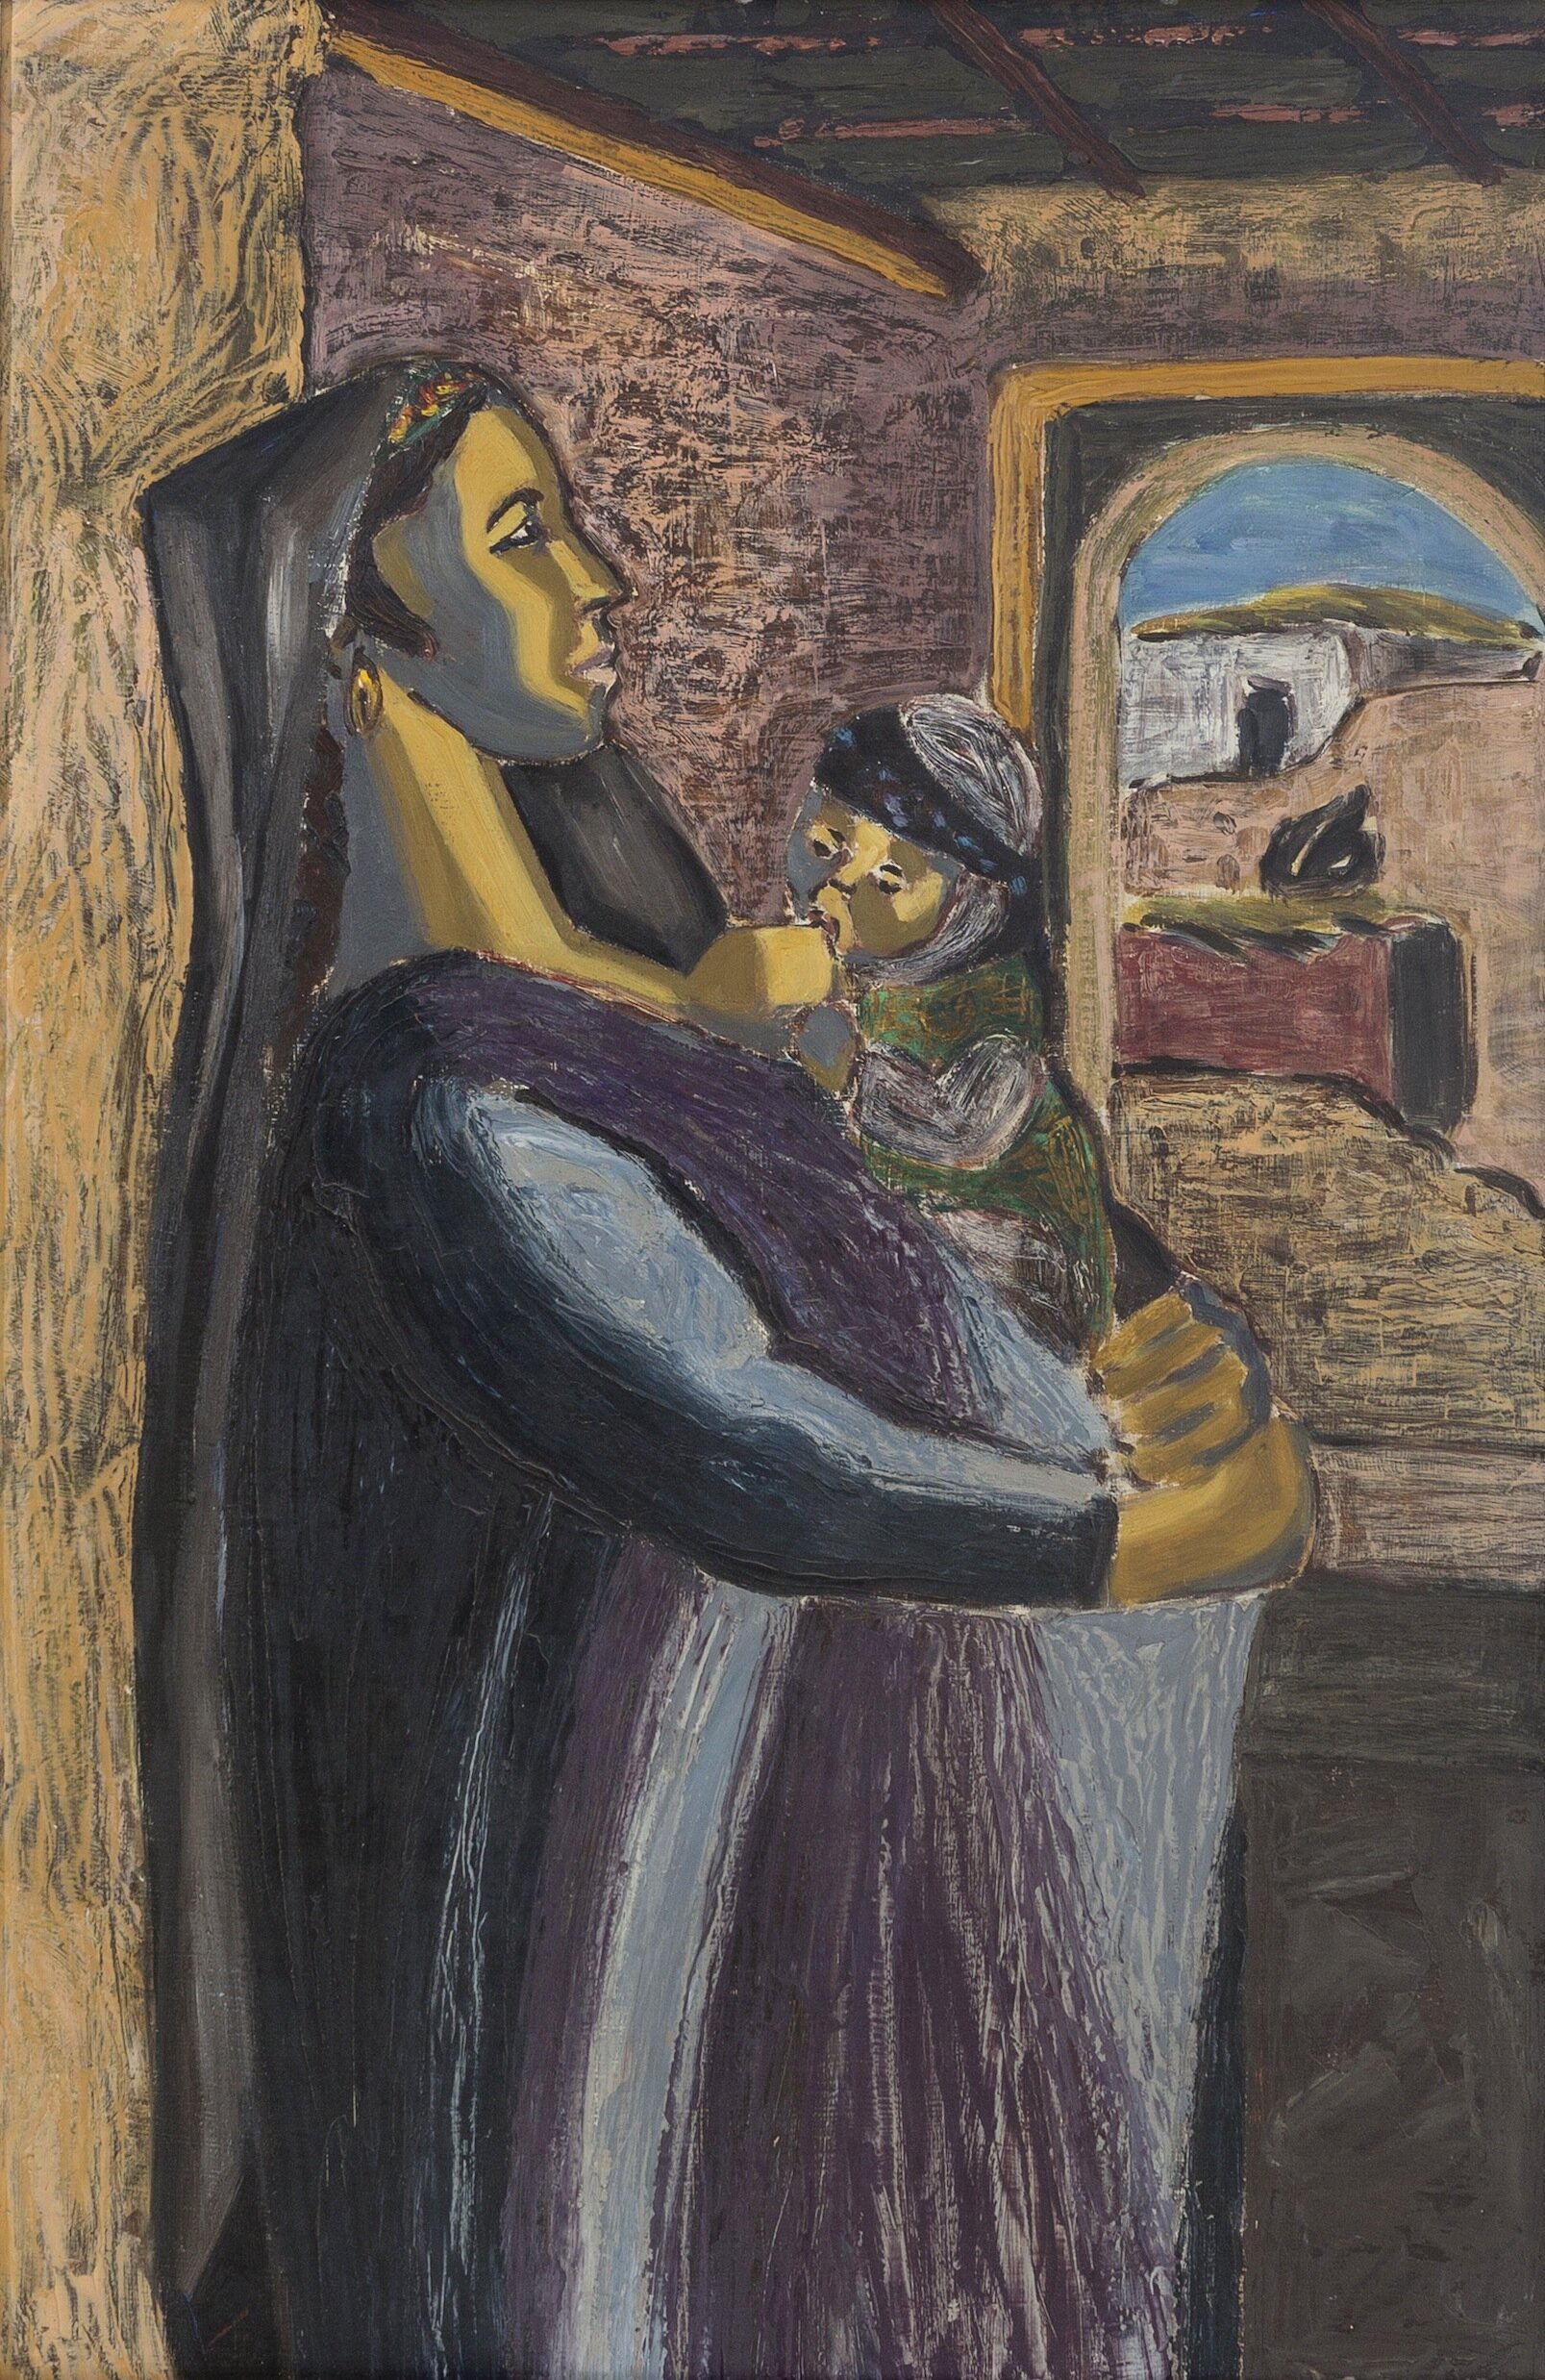 Inji Efflatoun, 'Motherhood,' c. 1950s  oil on wood, 75 x 47 cm. Image courtesy of Barjeel Art Foundation, Sharjah